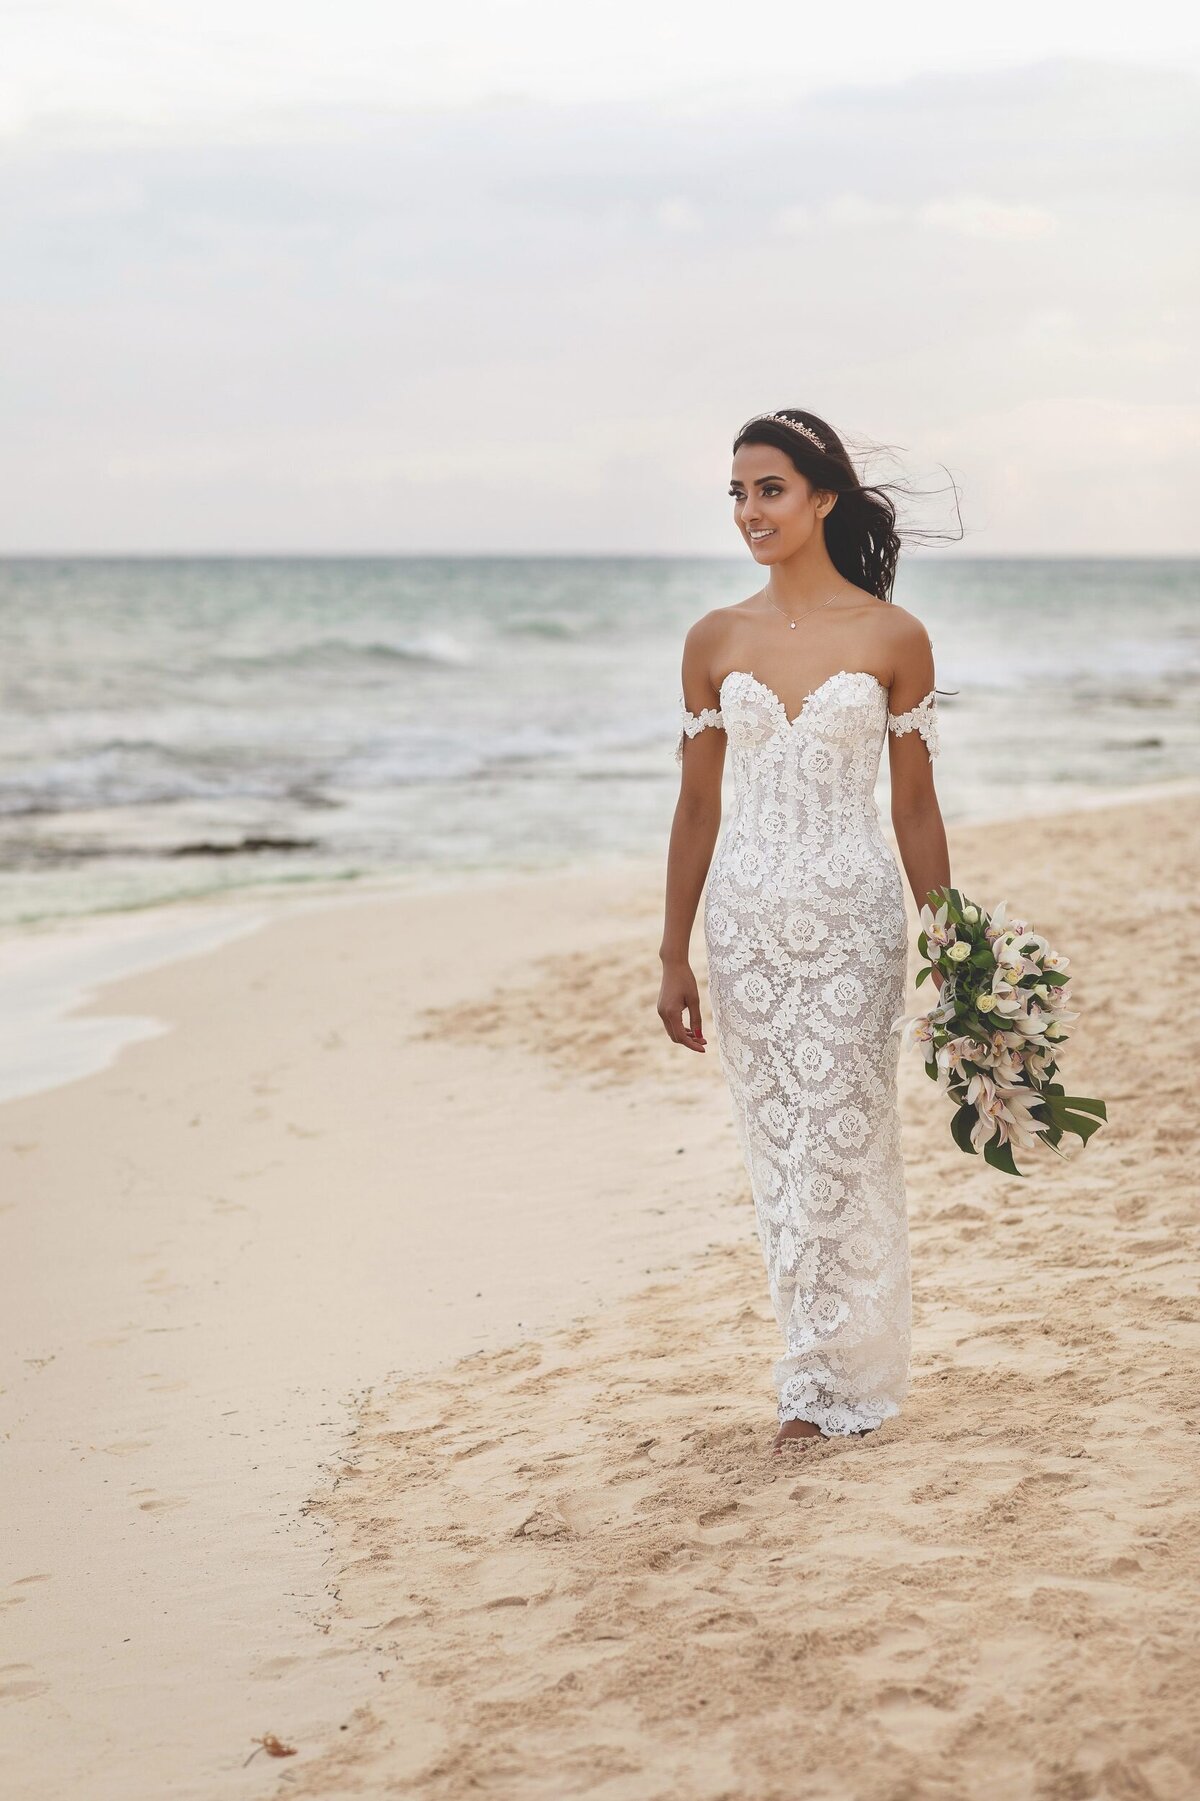 Bride walking on beach in riviera Maya